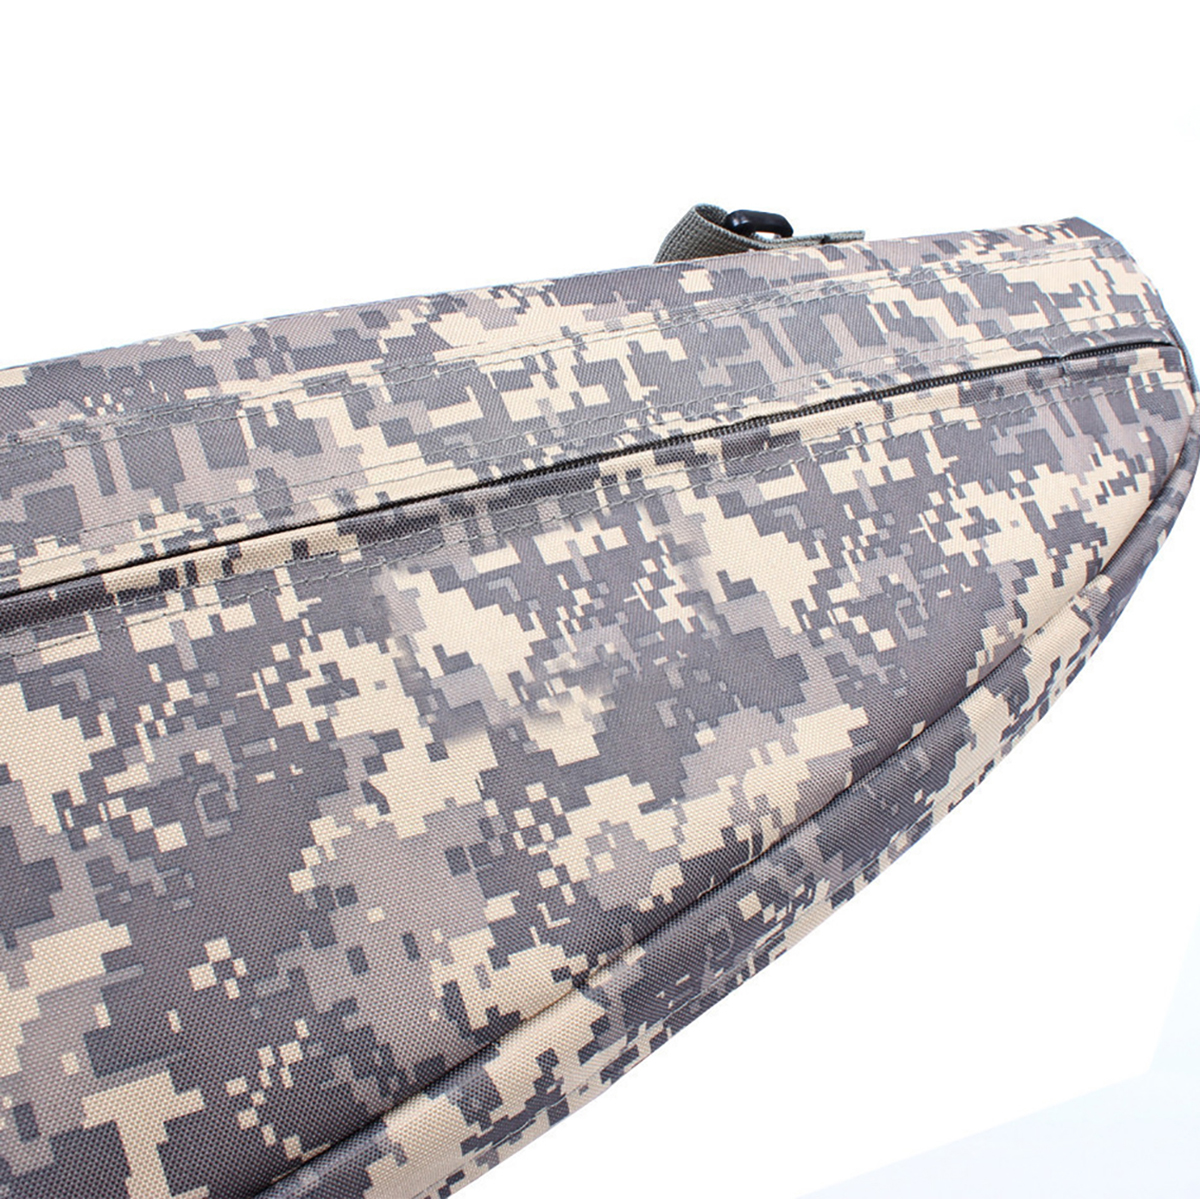 120X30X5CM-Tactical-Bag-Heavy-Duty-Hiking-Climbing-Hunting-Shooting-Carry-Case-Bag-Shoulder-Bag-1674190-11